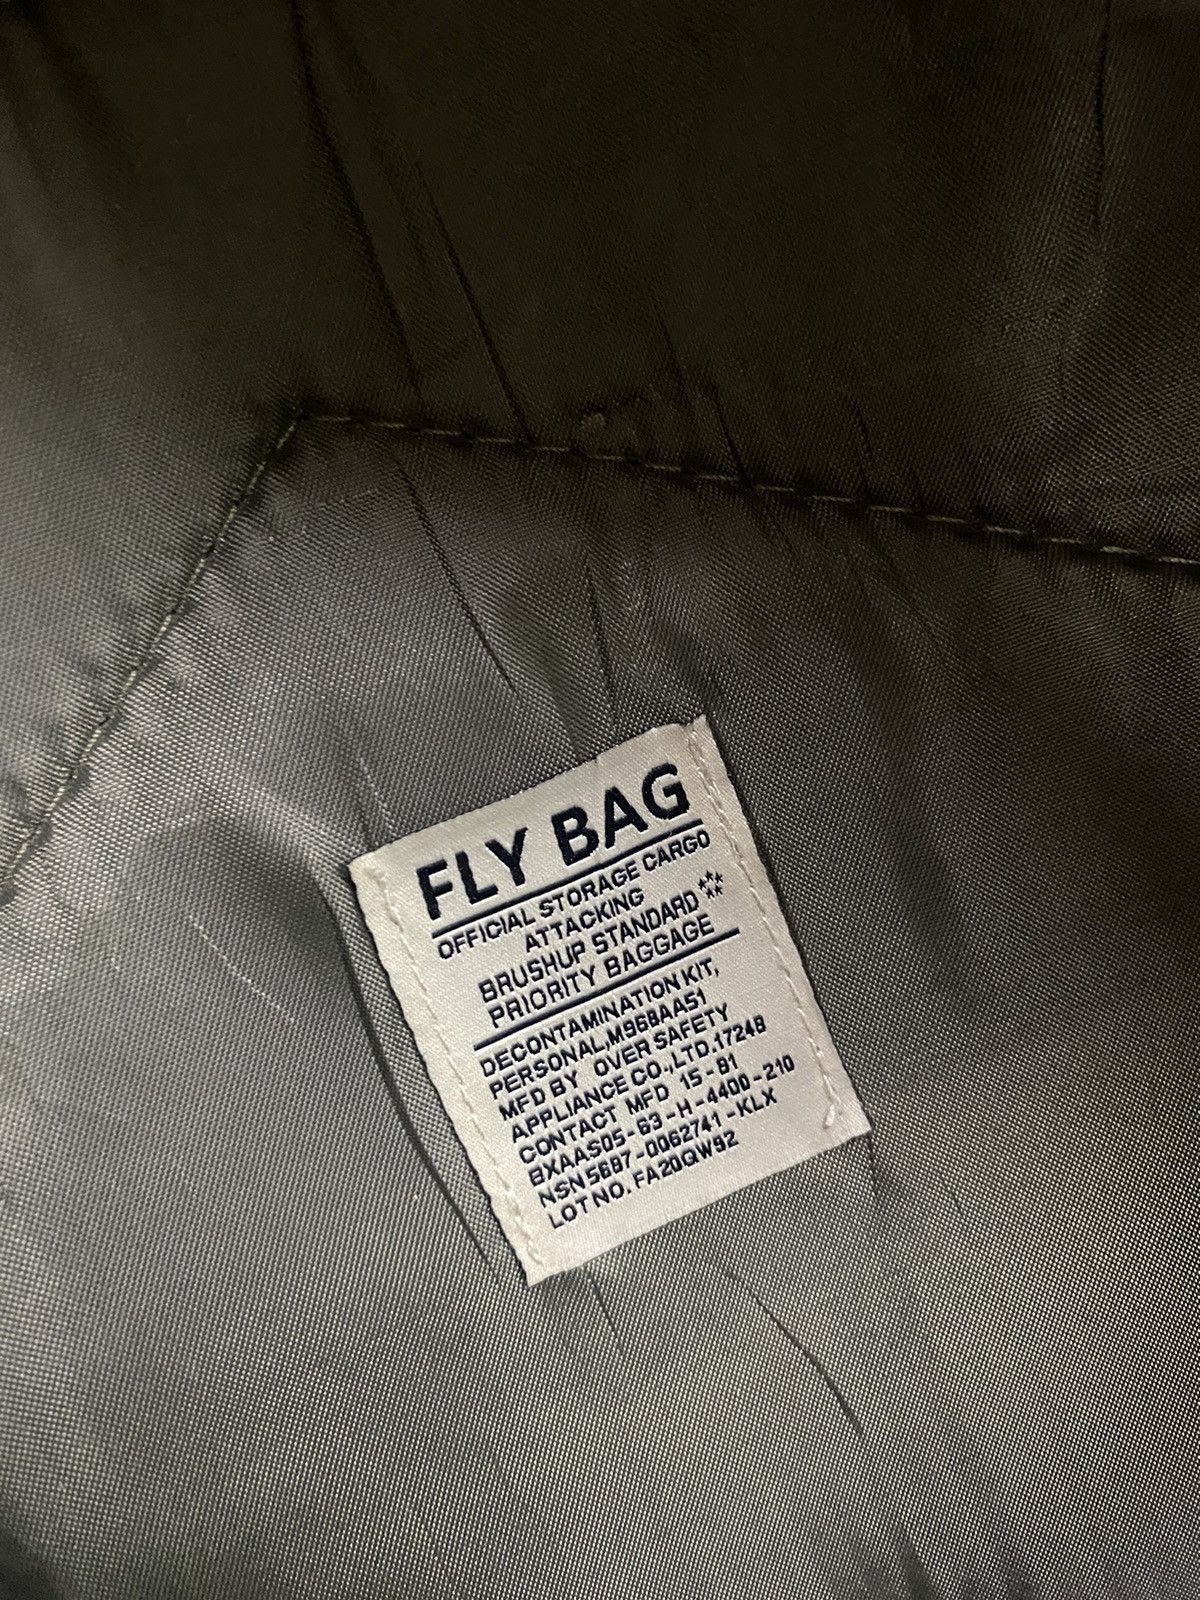 Fly Bag Paper Thin Waterproof Backpack - 13